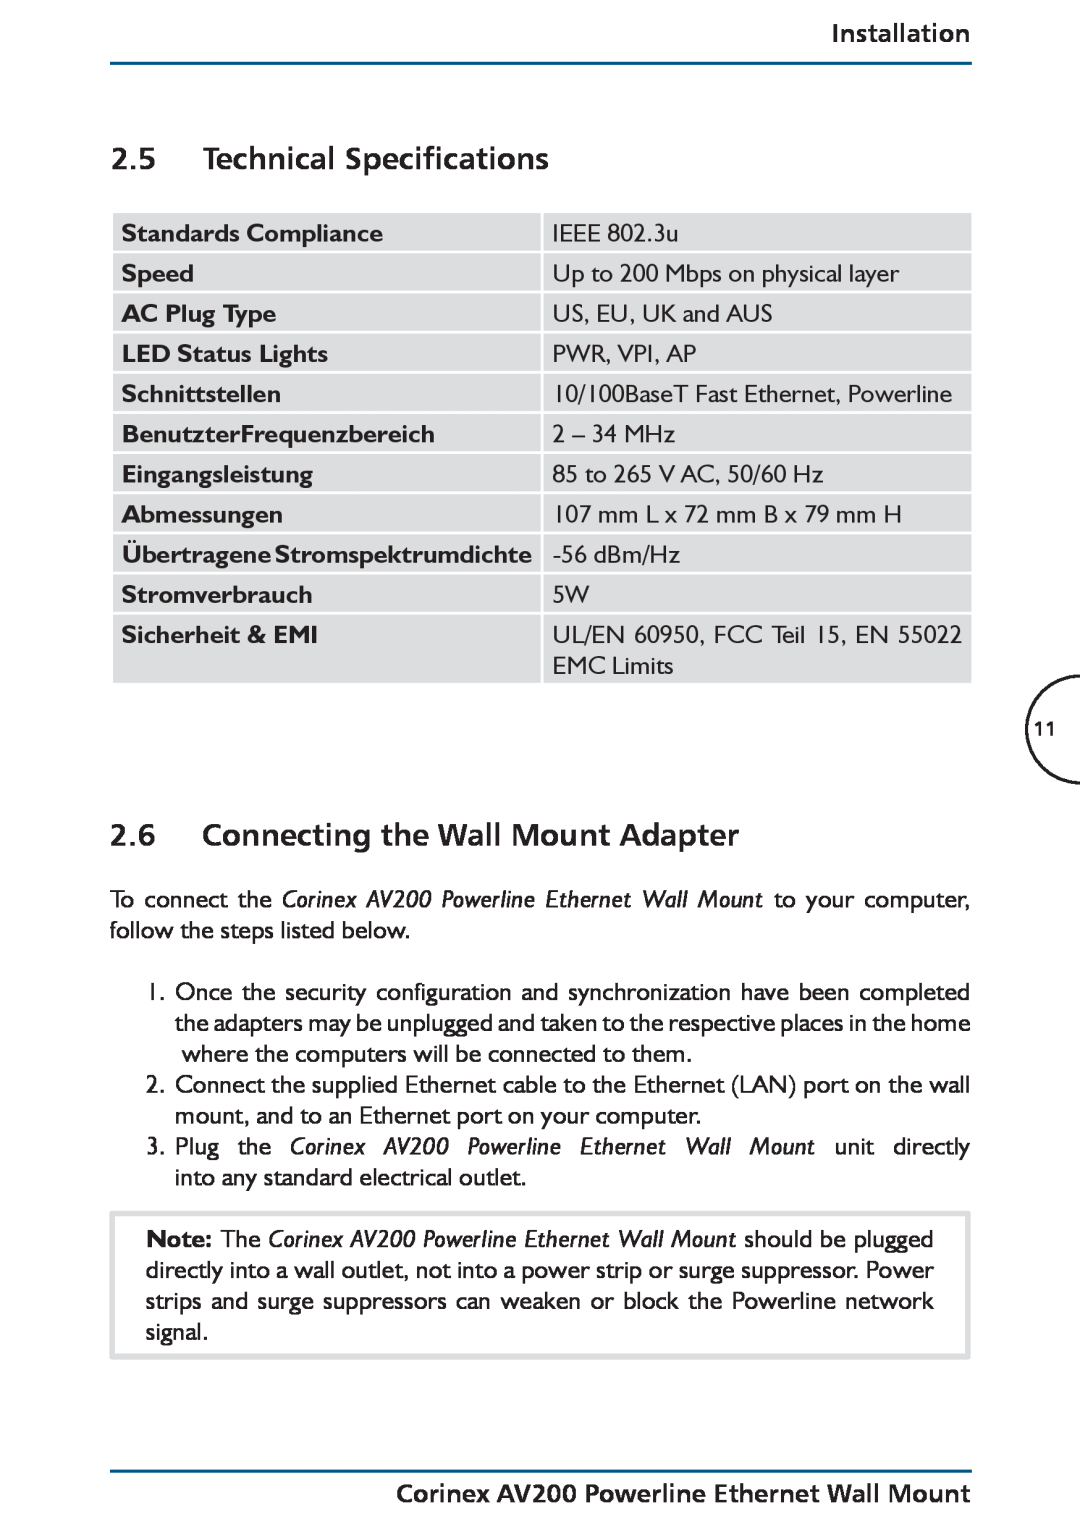 DeWalt AV200 manual Technical Specifications, Connecting the Wall Mount Adapter, Standards Compliance, IEEE 802.3u, Speed 